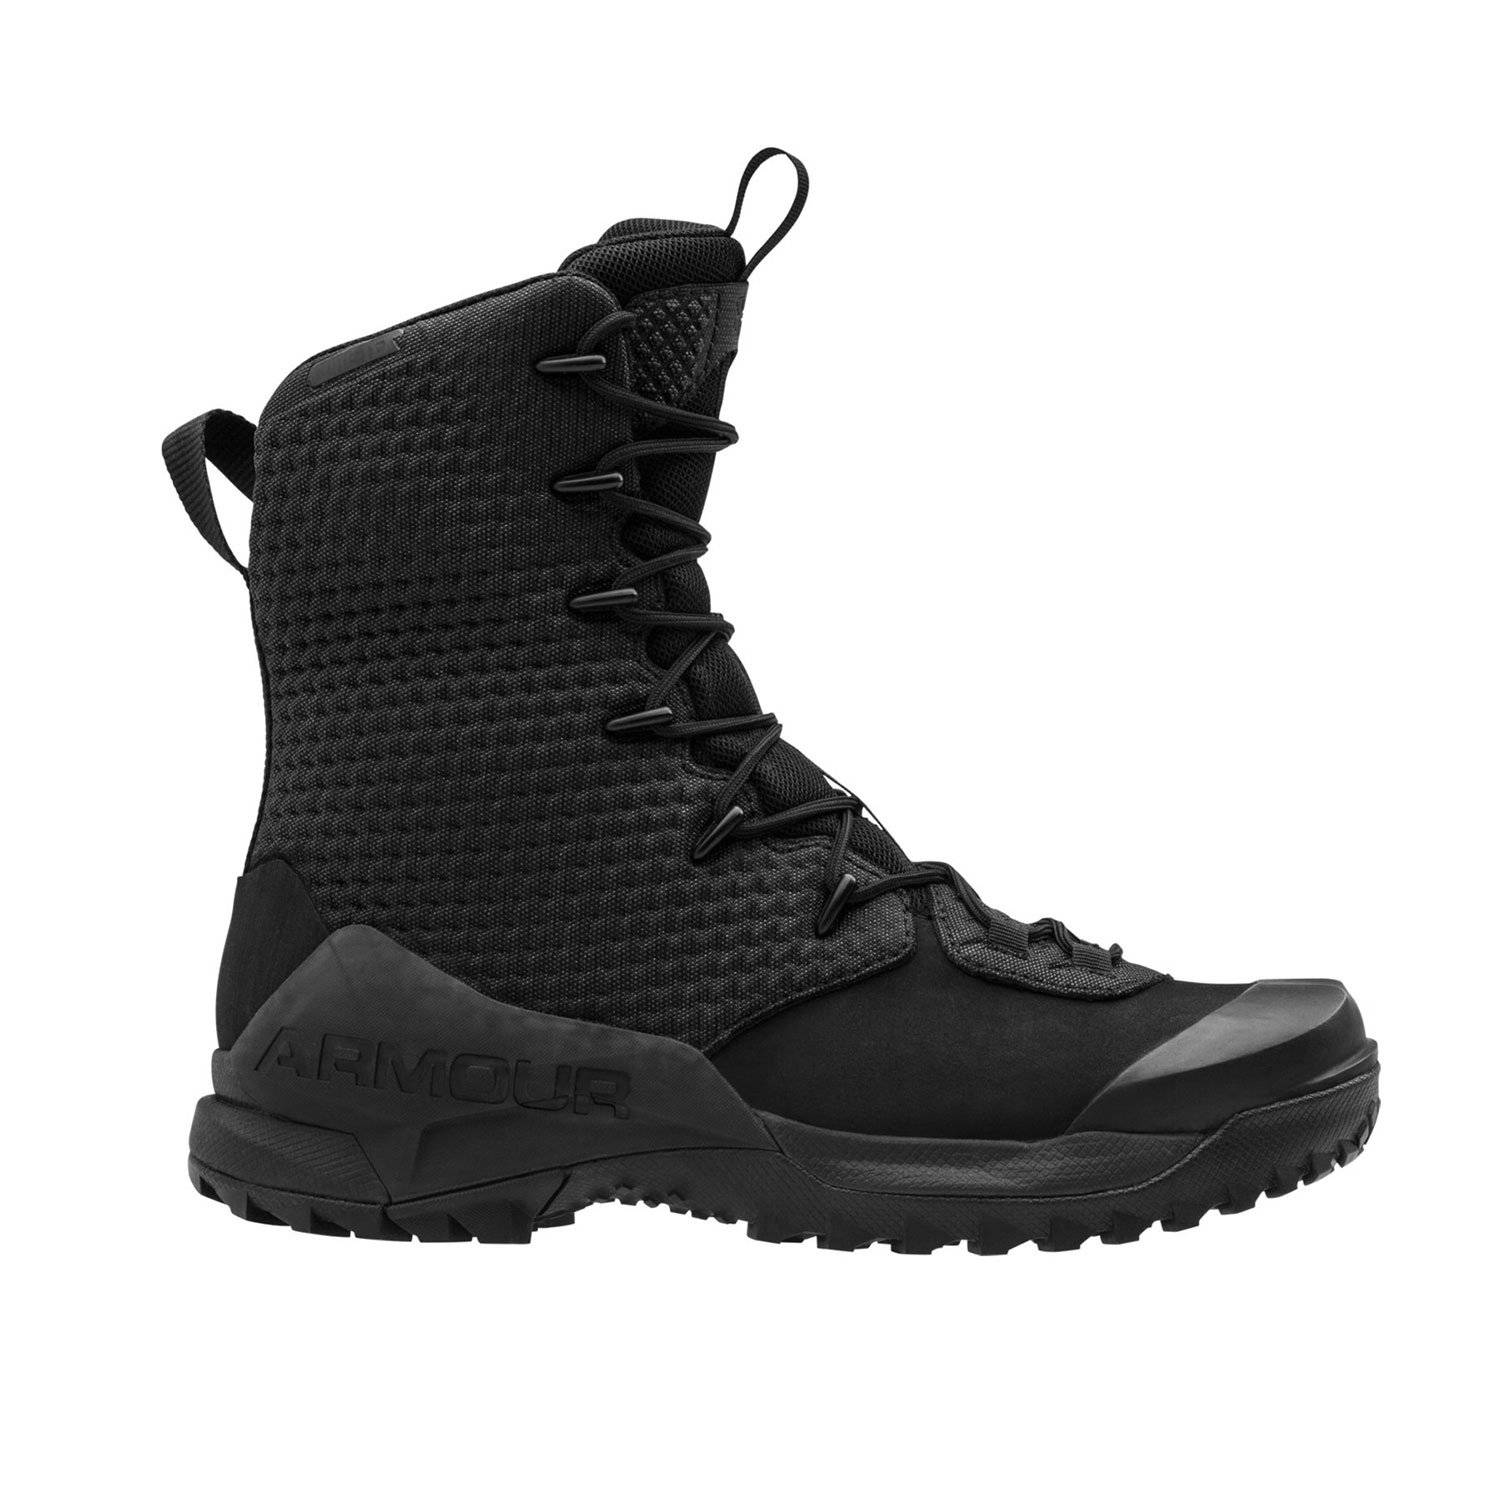 underarmour waterproof boots